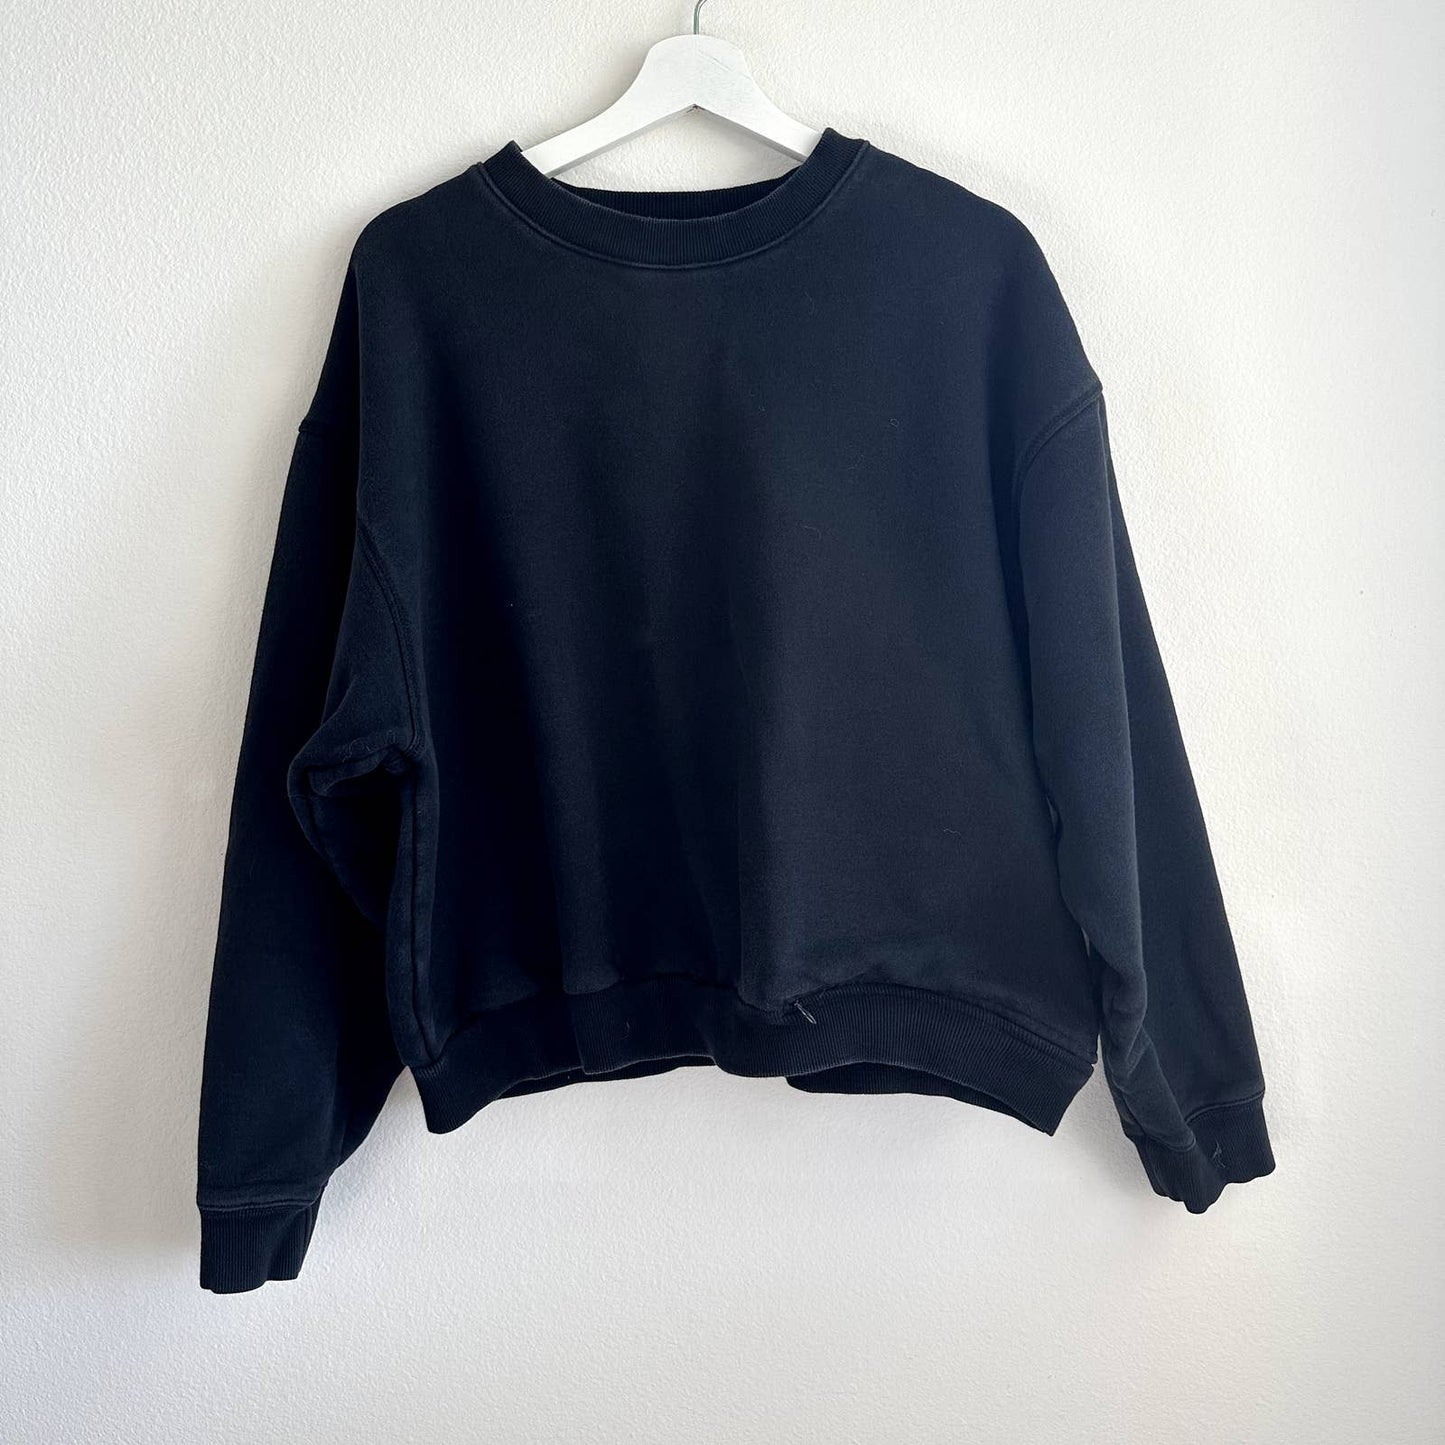 Black crewneck asymmetric zipper hem long sleeve sweatshirt sweater